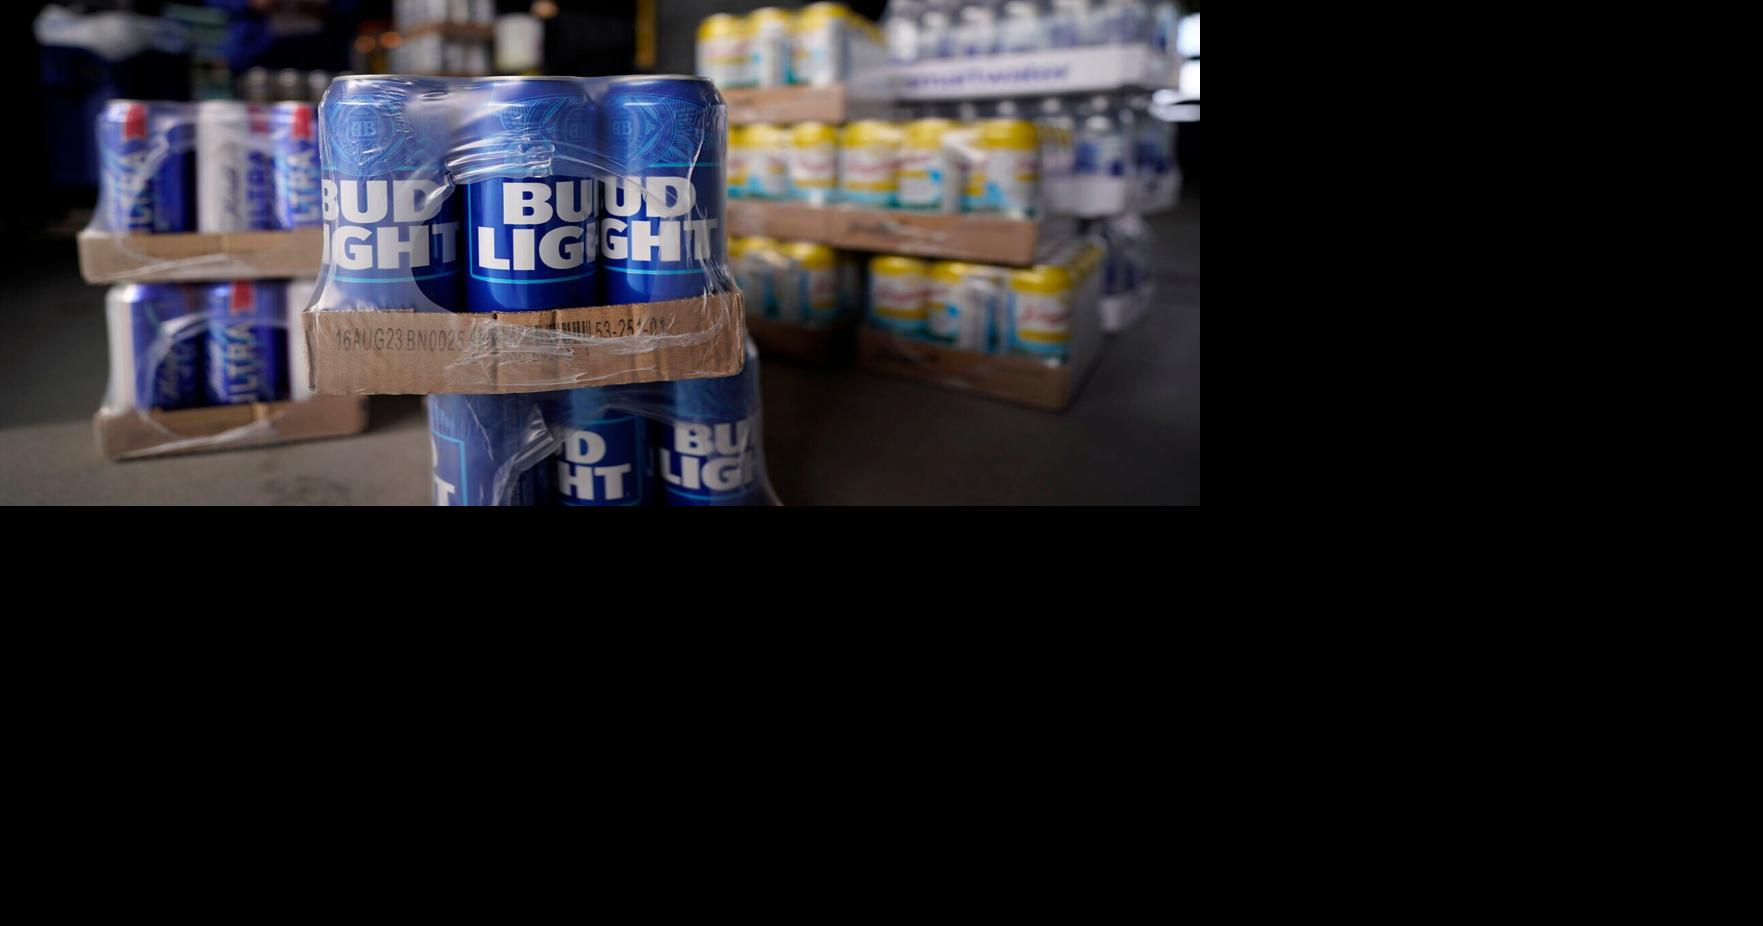 Bud Light maker to lay off hundreds after boycott over trans